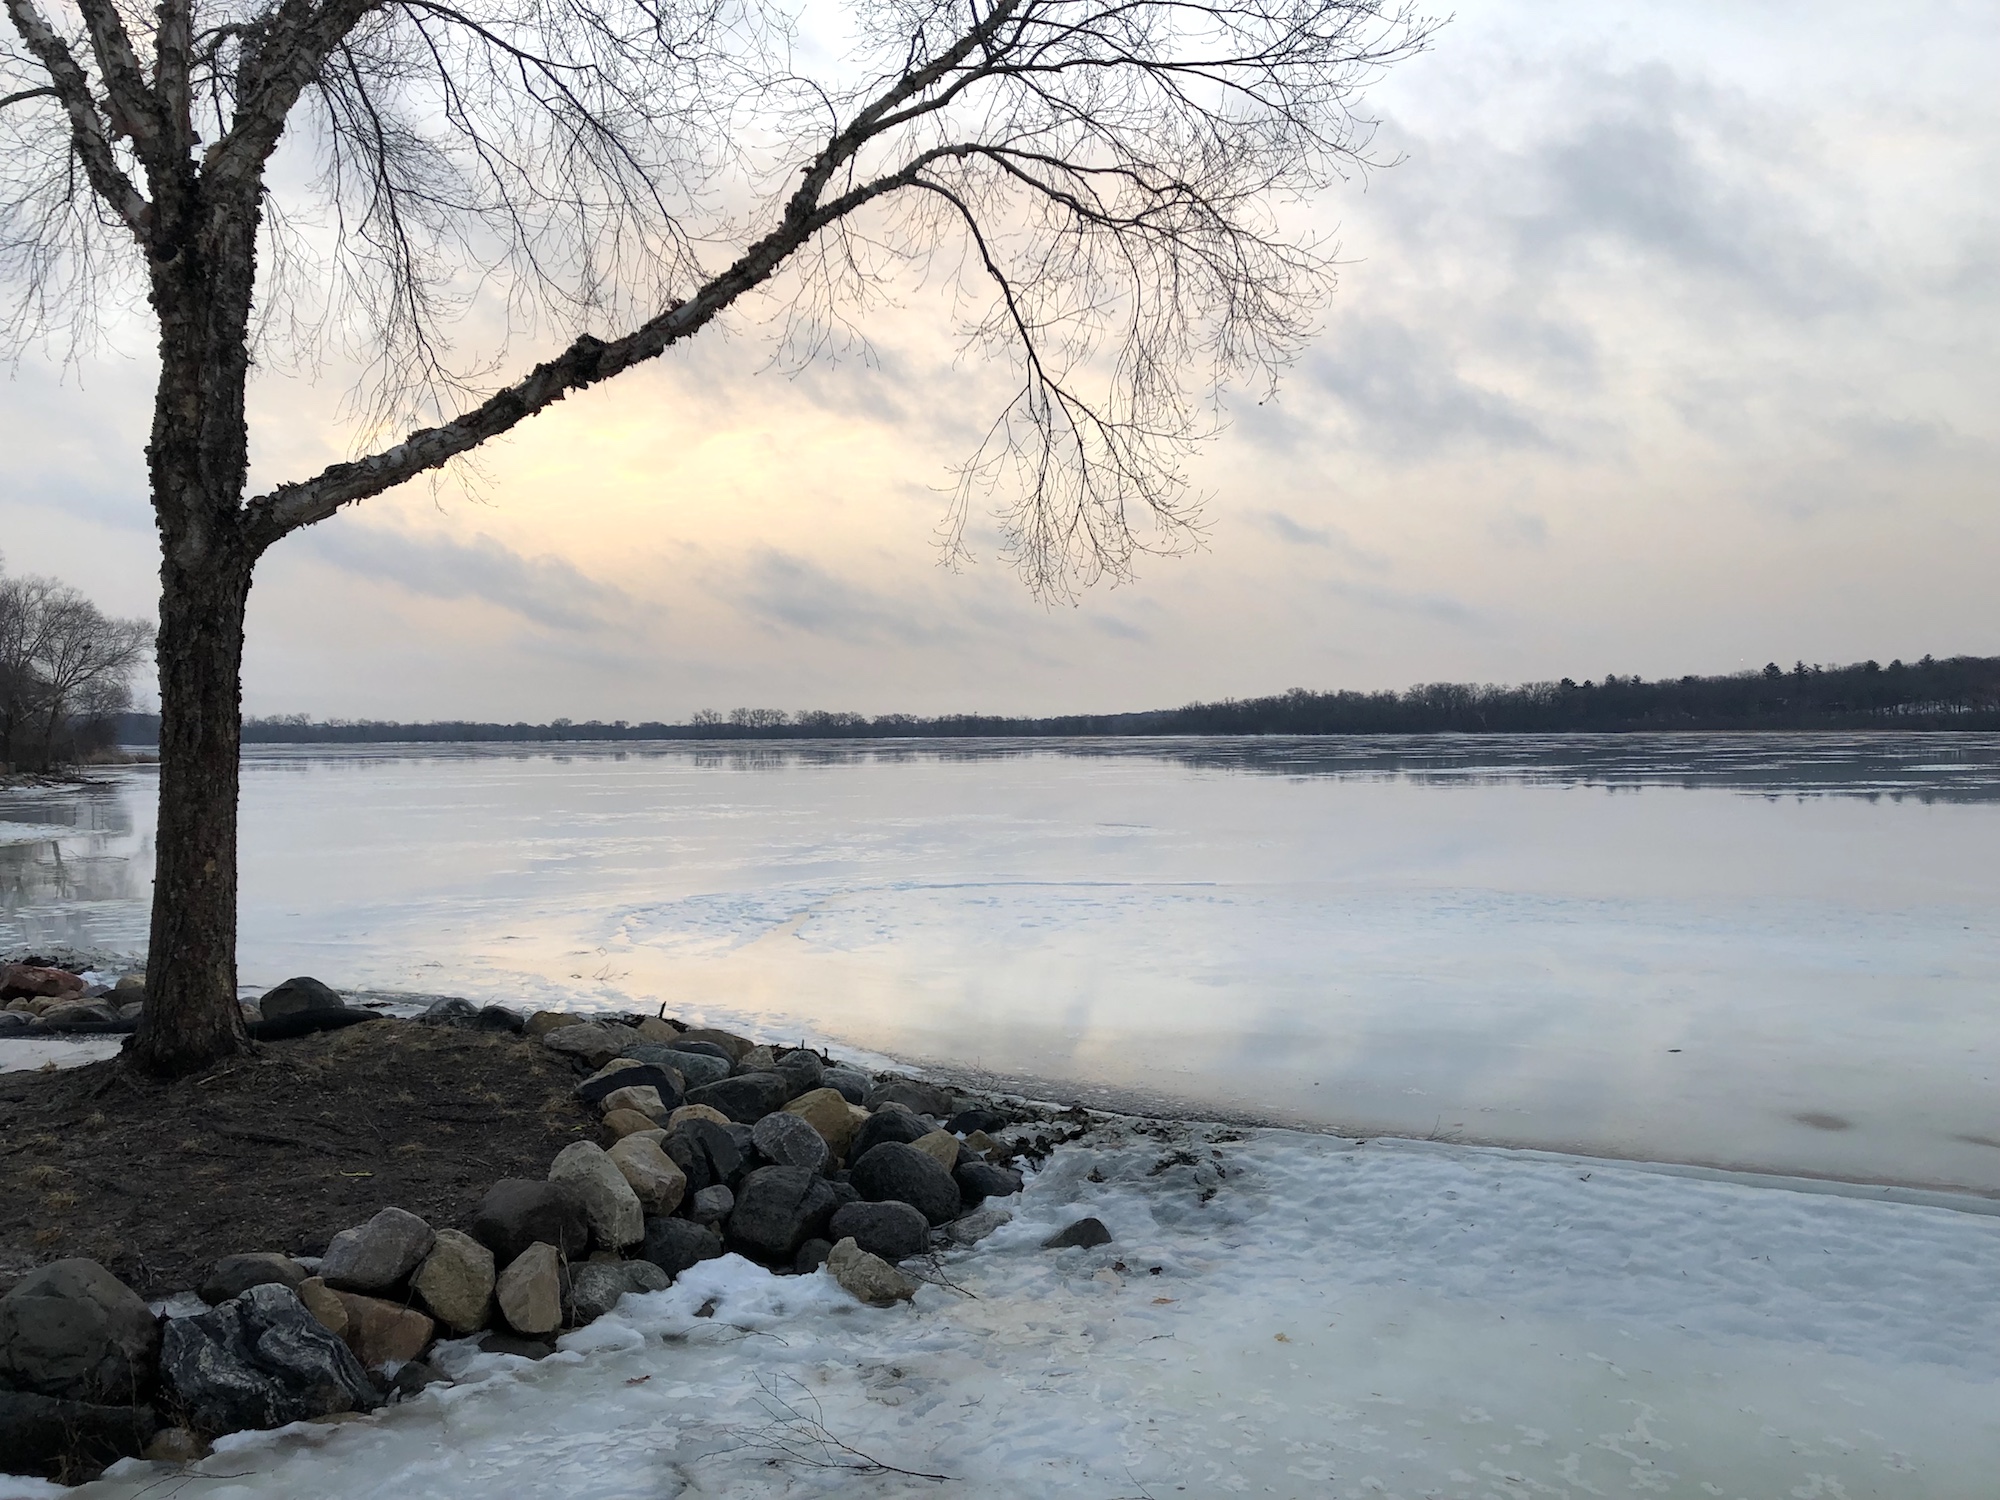 Lake Wingra on March 14, 2019.